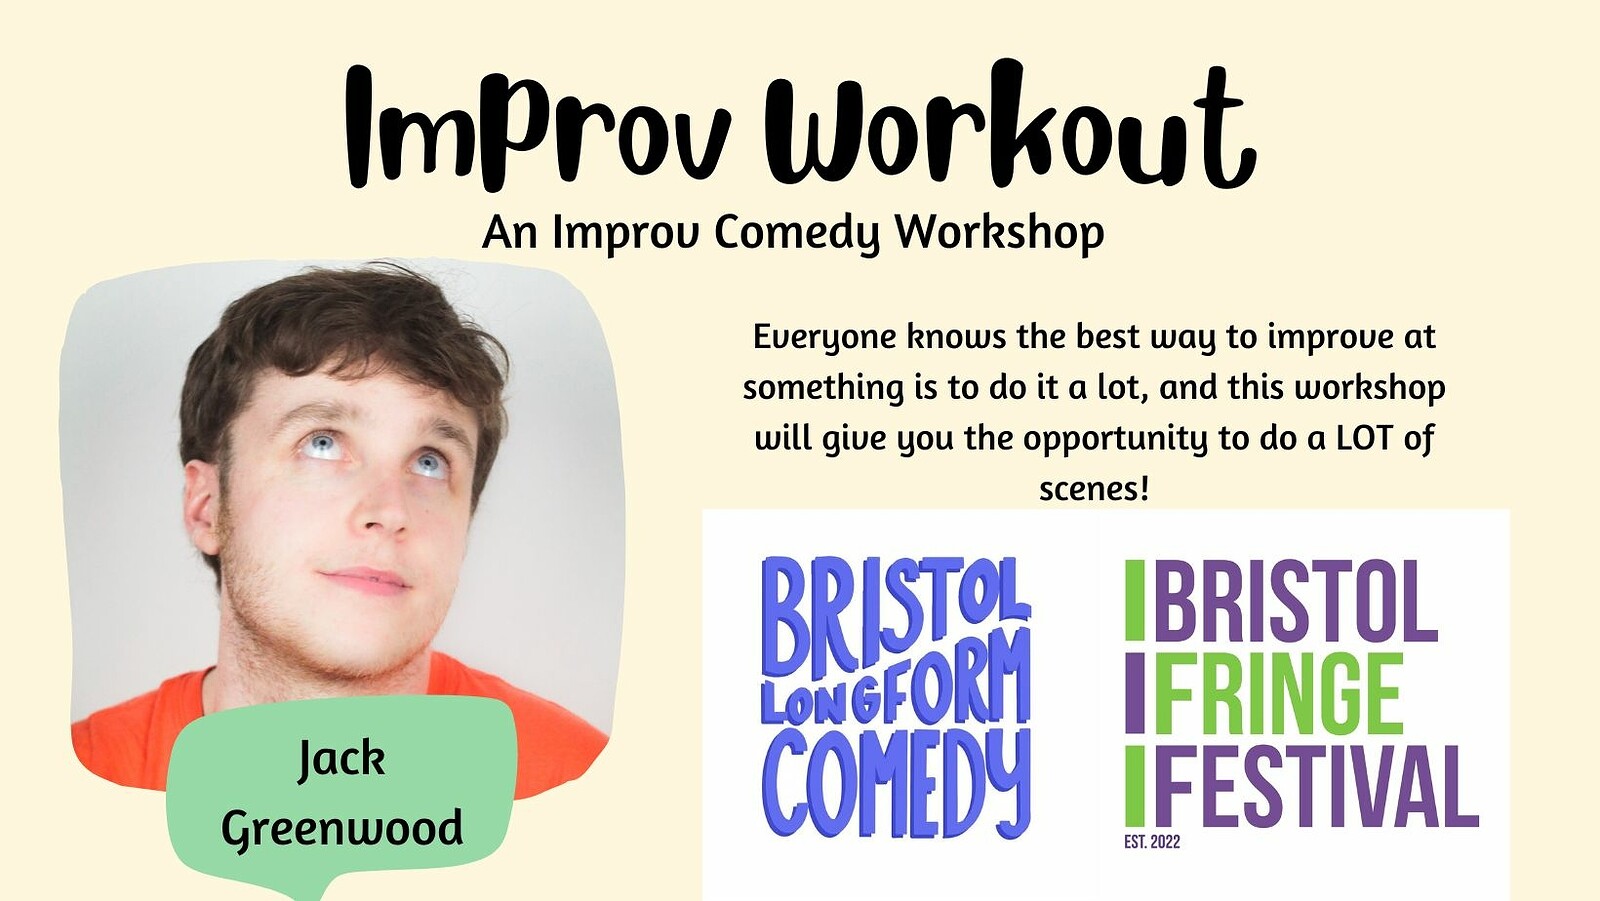 Bristol Longform Comedy Improv Intensive at The Cloak and Dagger